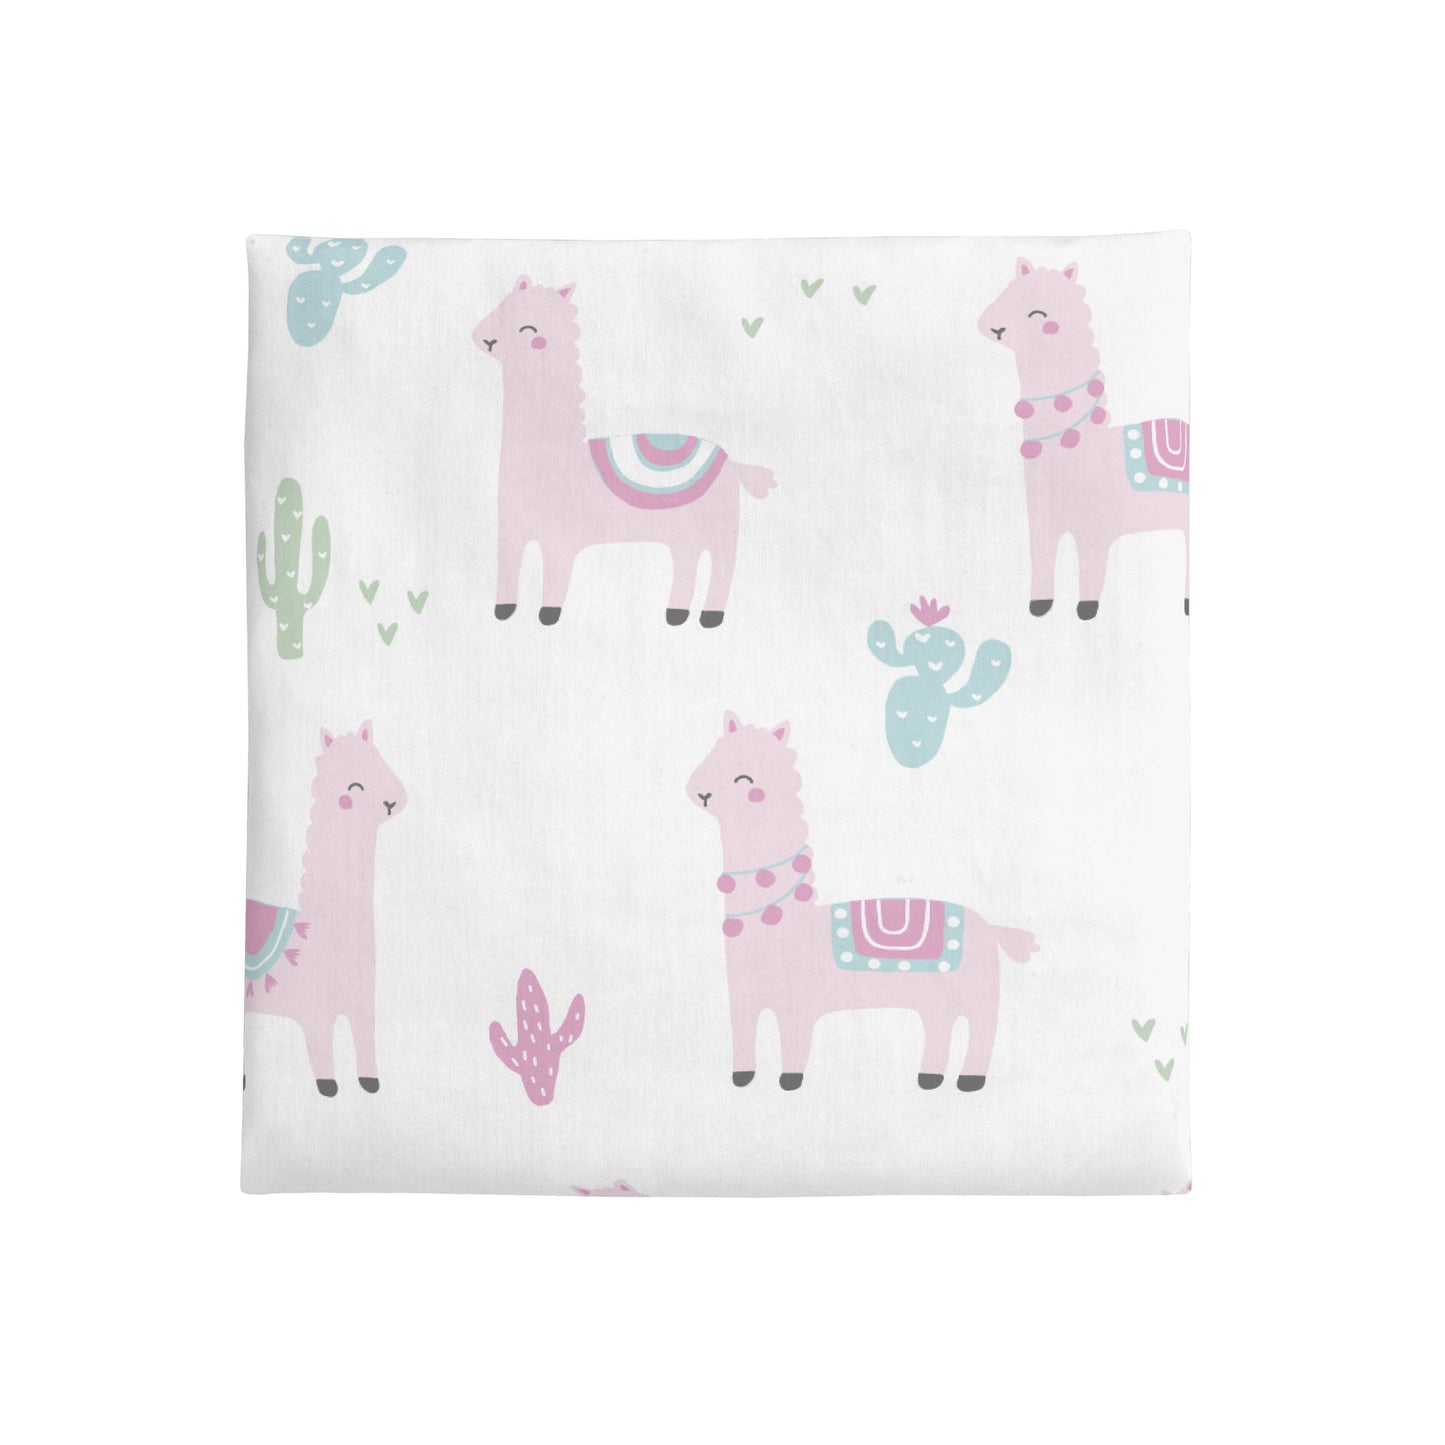 NoJo Super Soft Pink Llama Nursery Crib Fitted Sheet